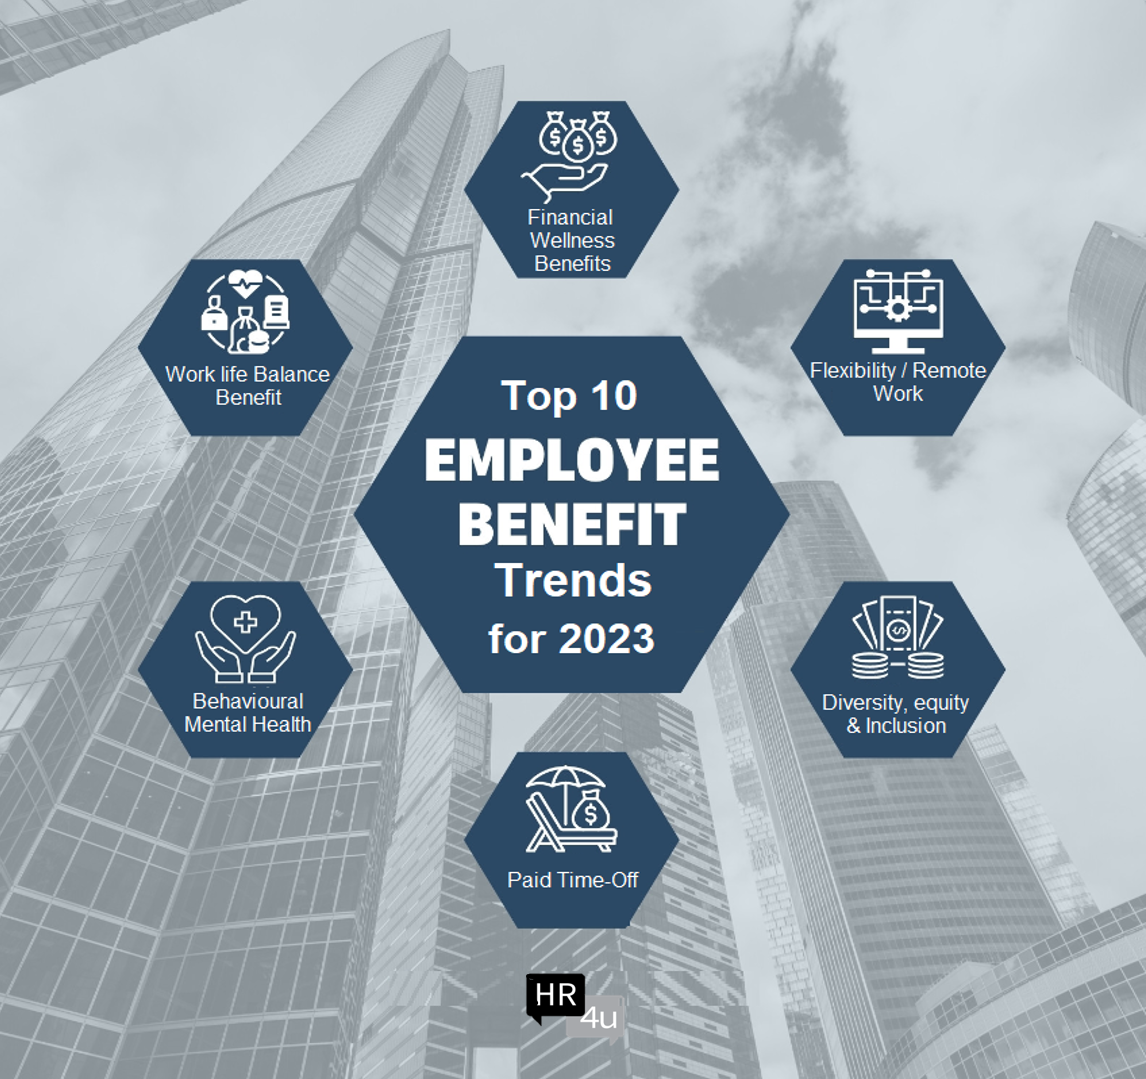 Top 10 Employee Benefits Trends for 2023